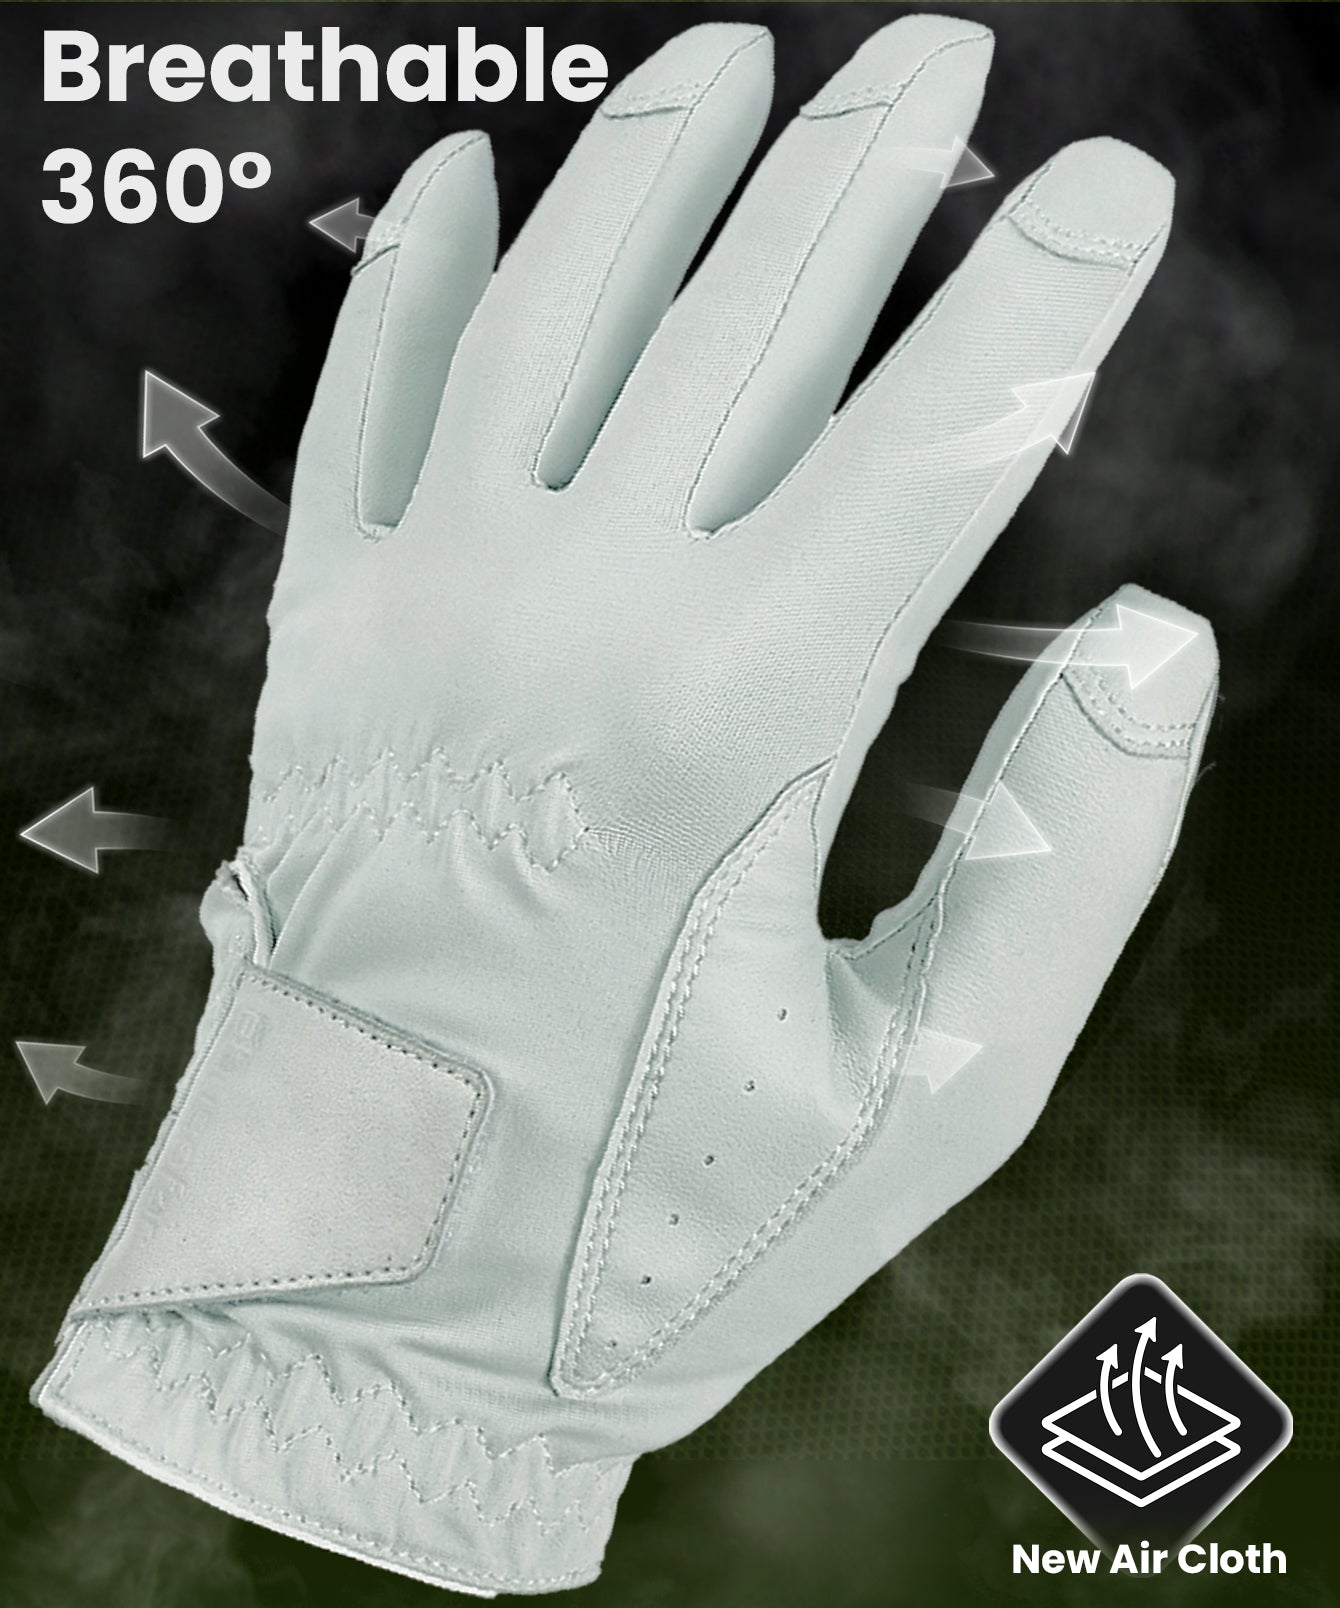 PrecisionPro Men's Golf Glove, Cabretta Leather, Not for Badges